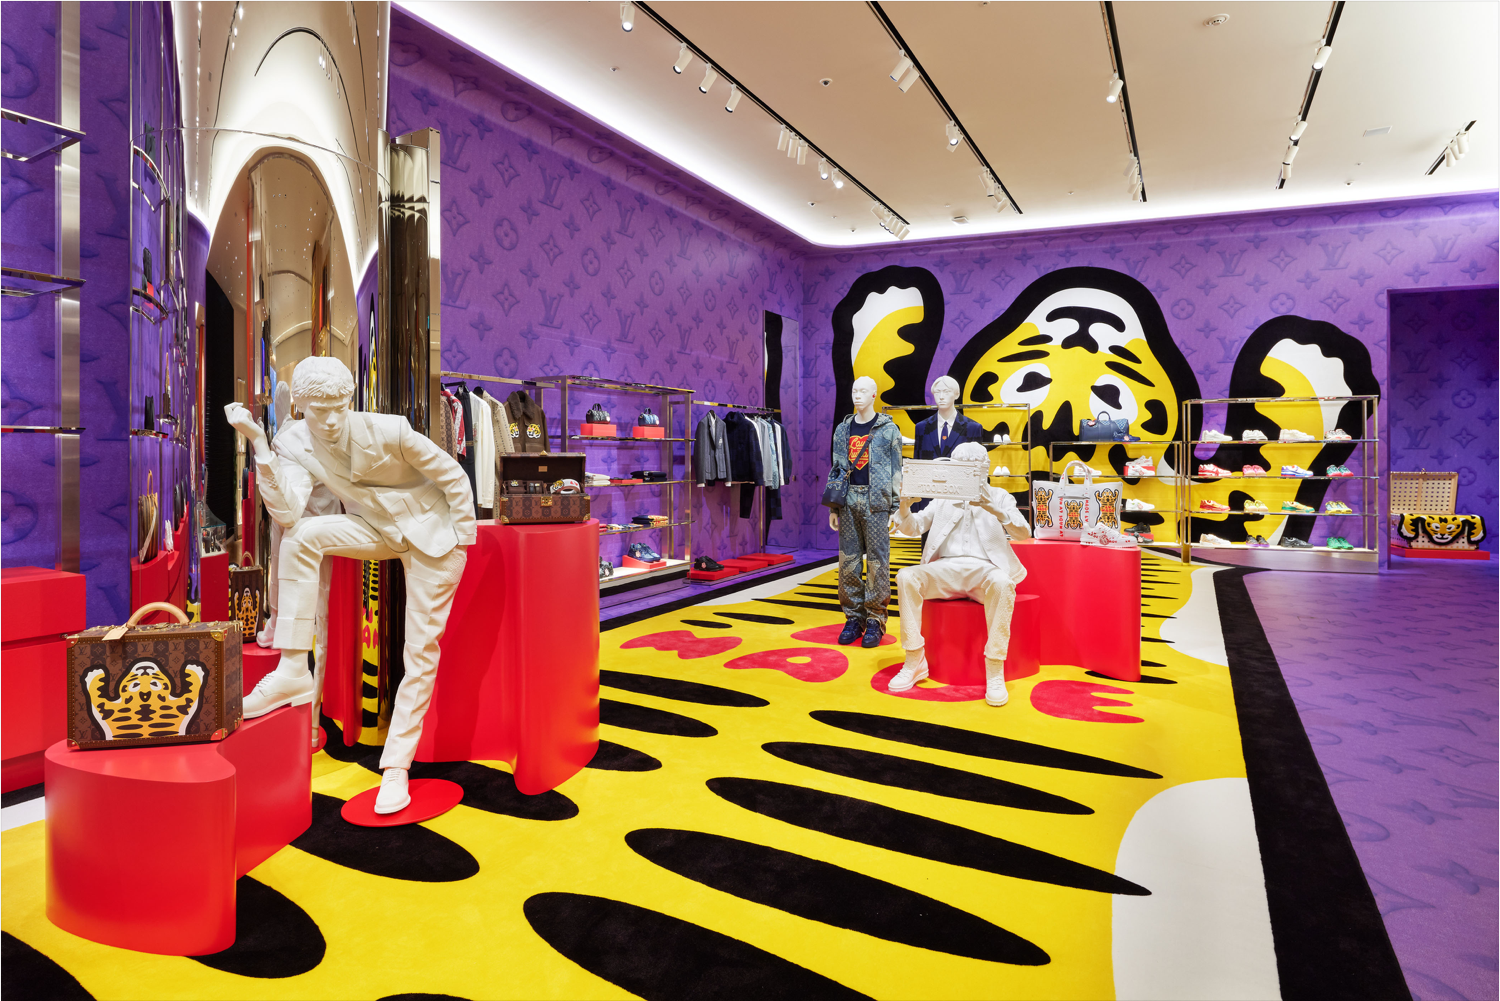 Tokyo: Louis Vuitton store renewal